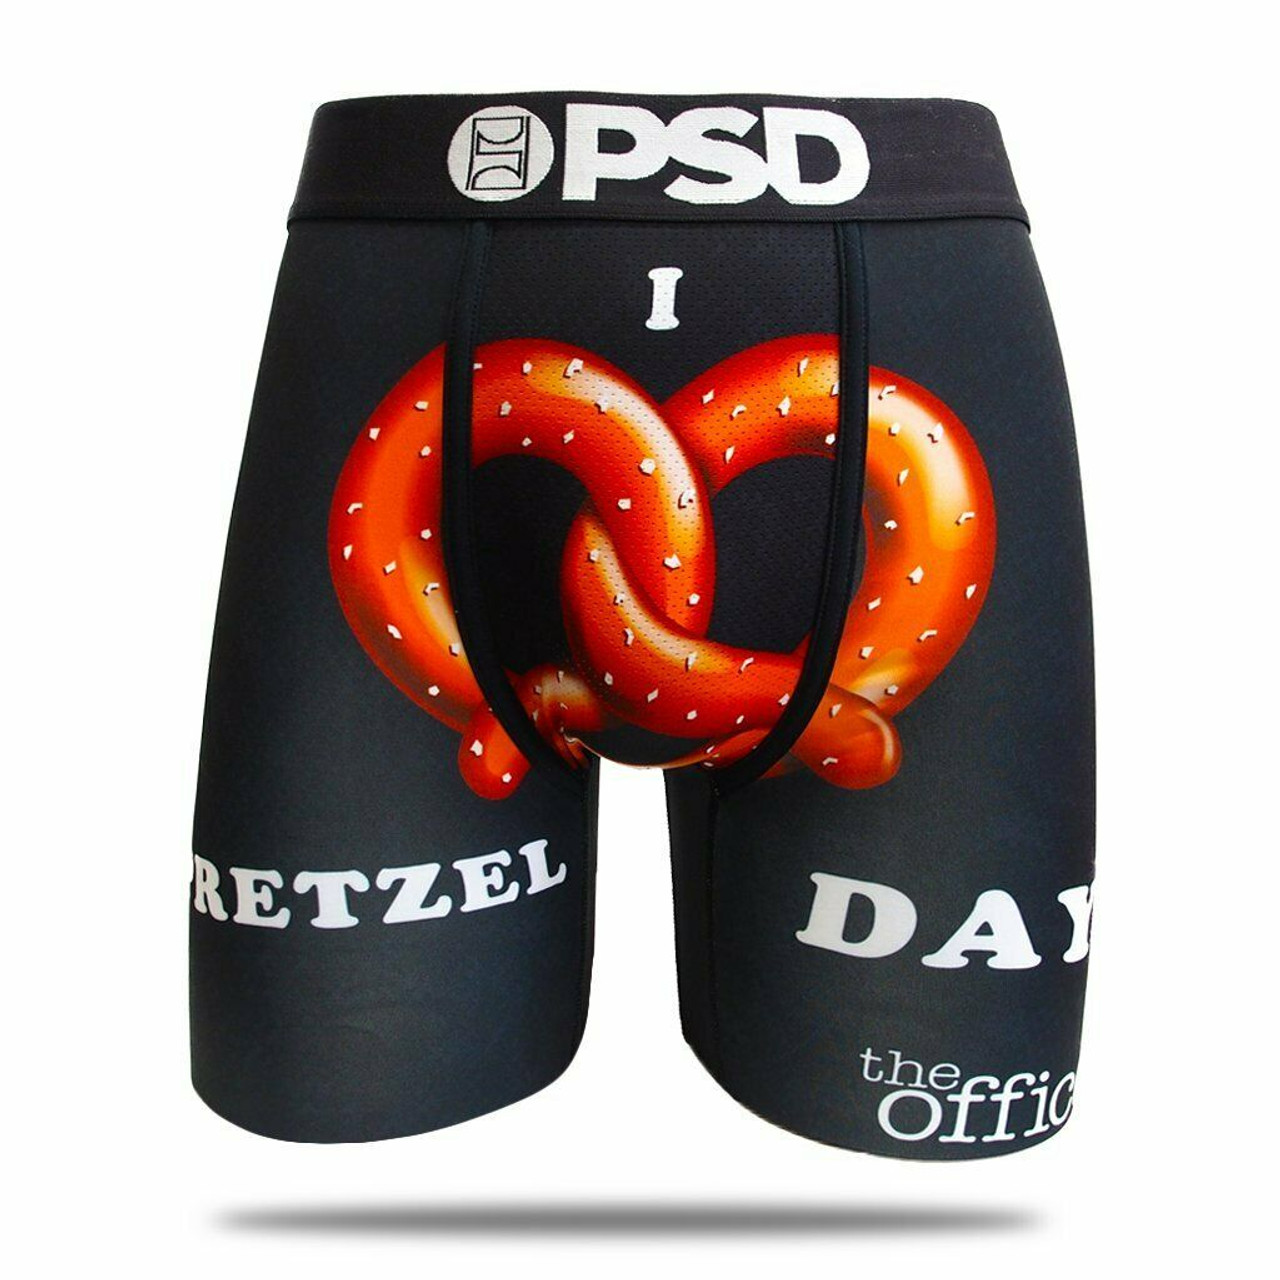 PSD The Office Pretzel Day Comedy TV Show Boxer Briefs Underwear